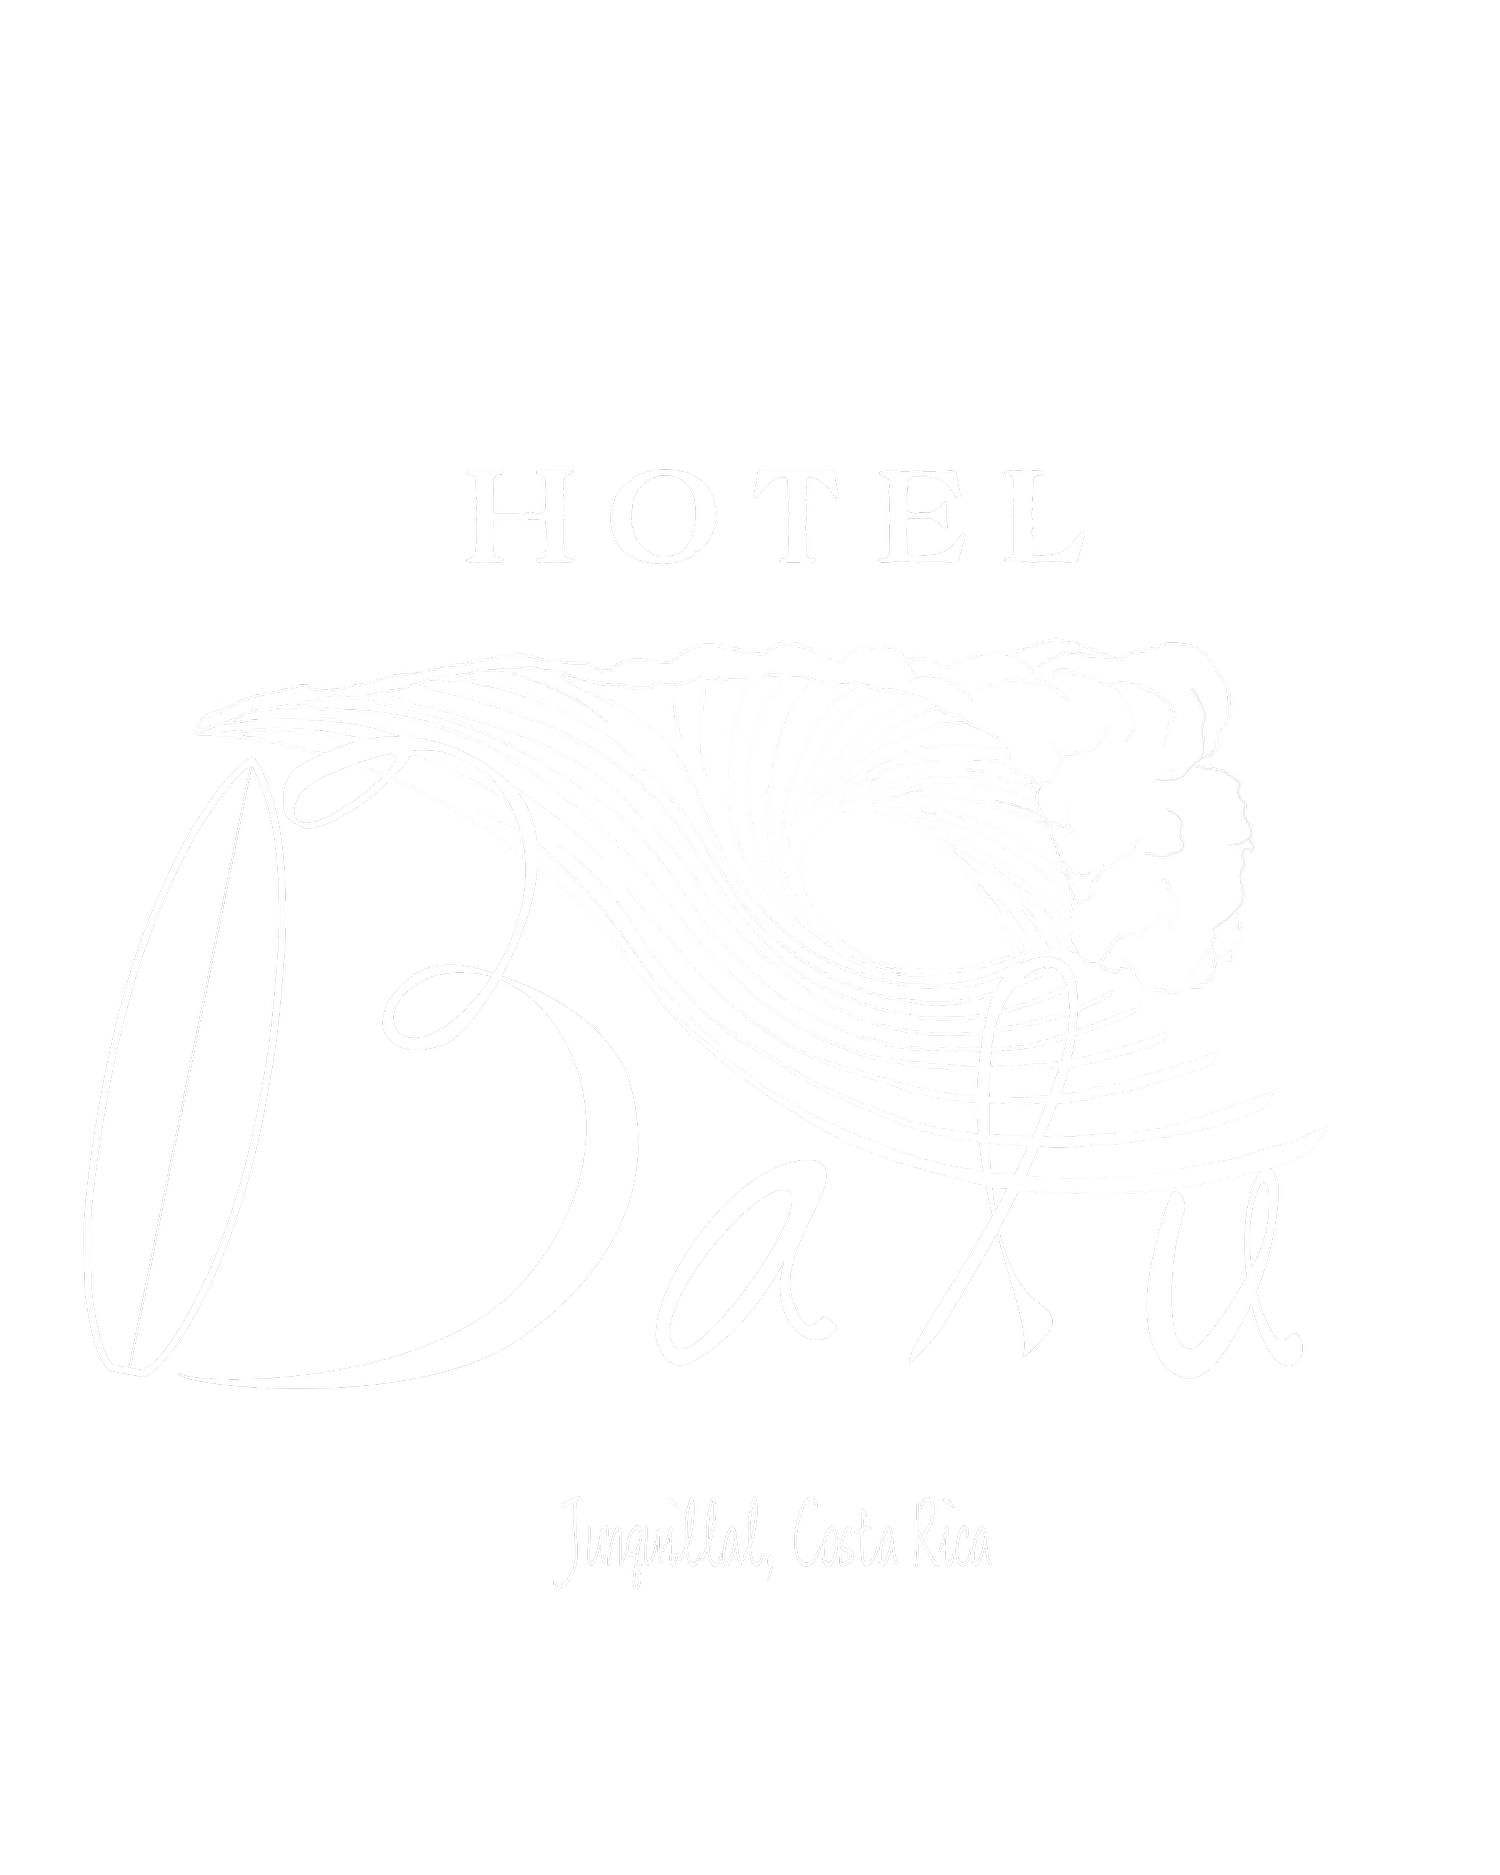 Hotel Balu